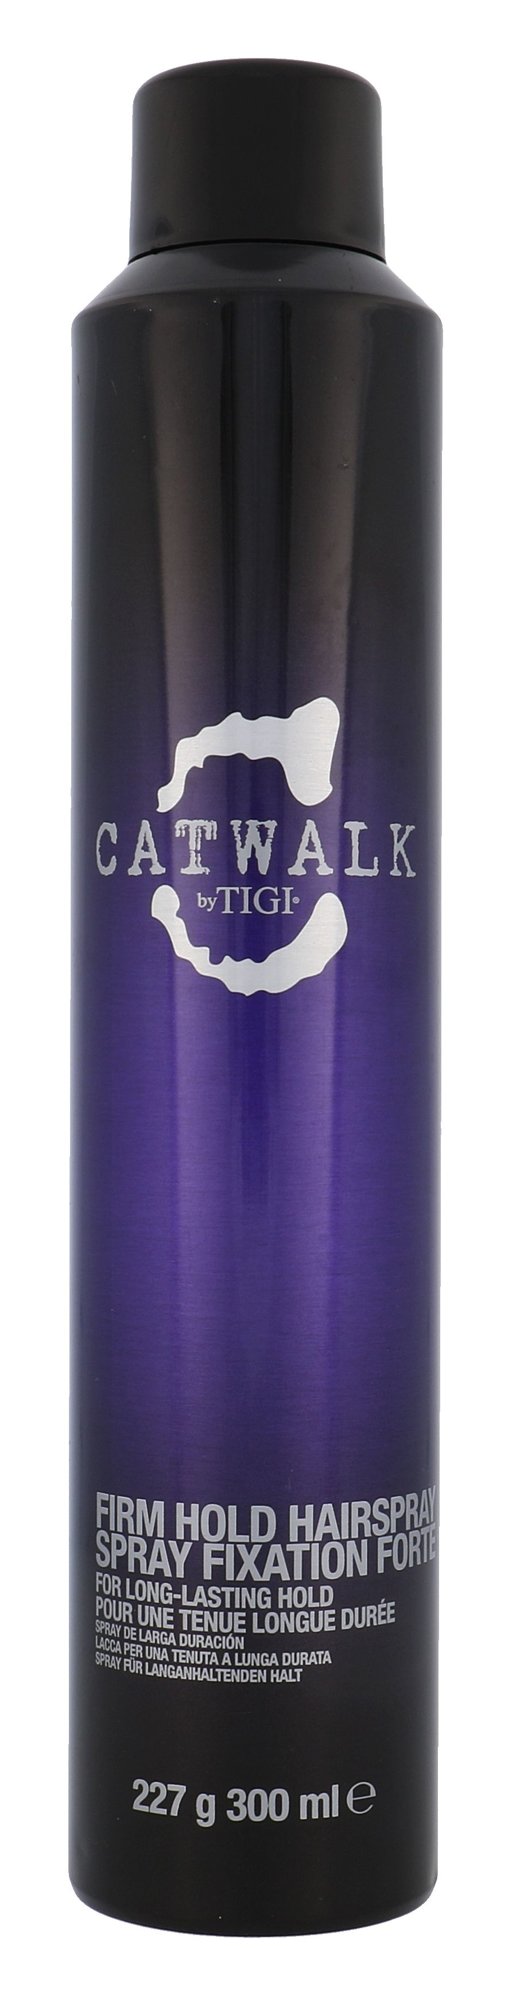 Tigi Catwalk Firm Hold Hairspray